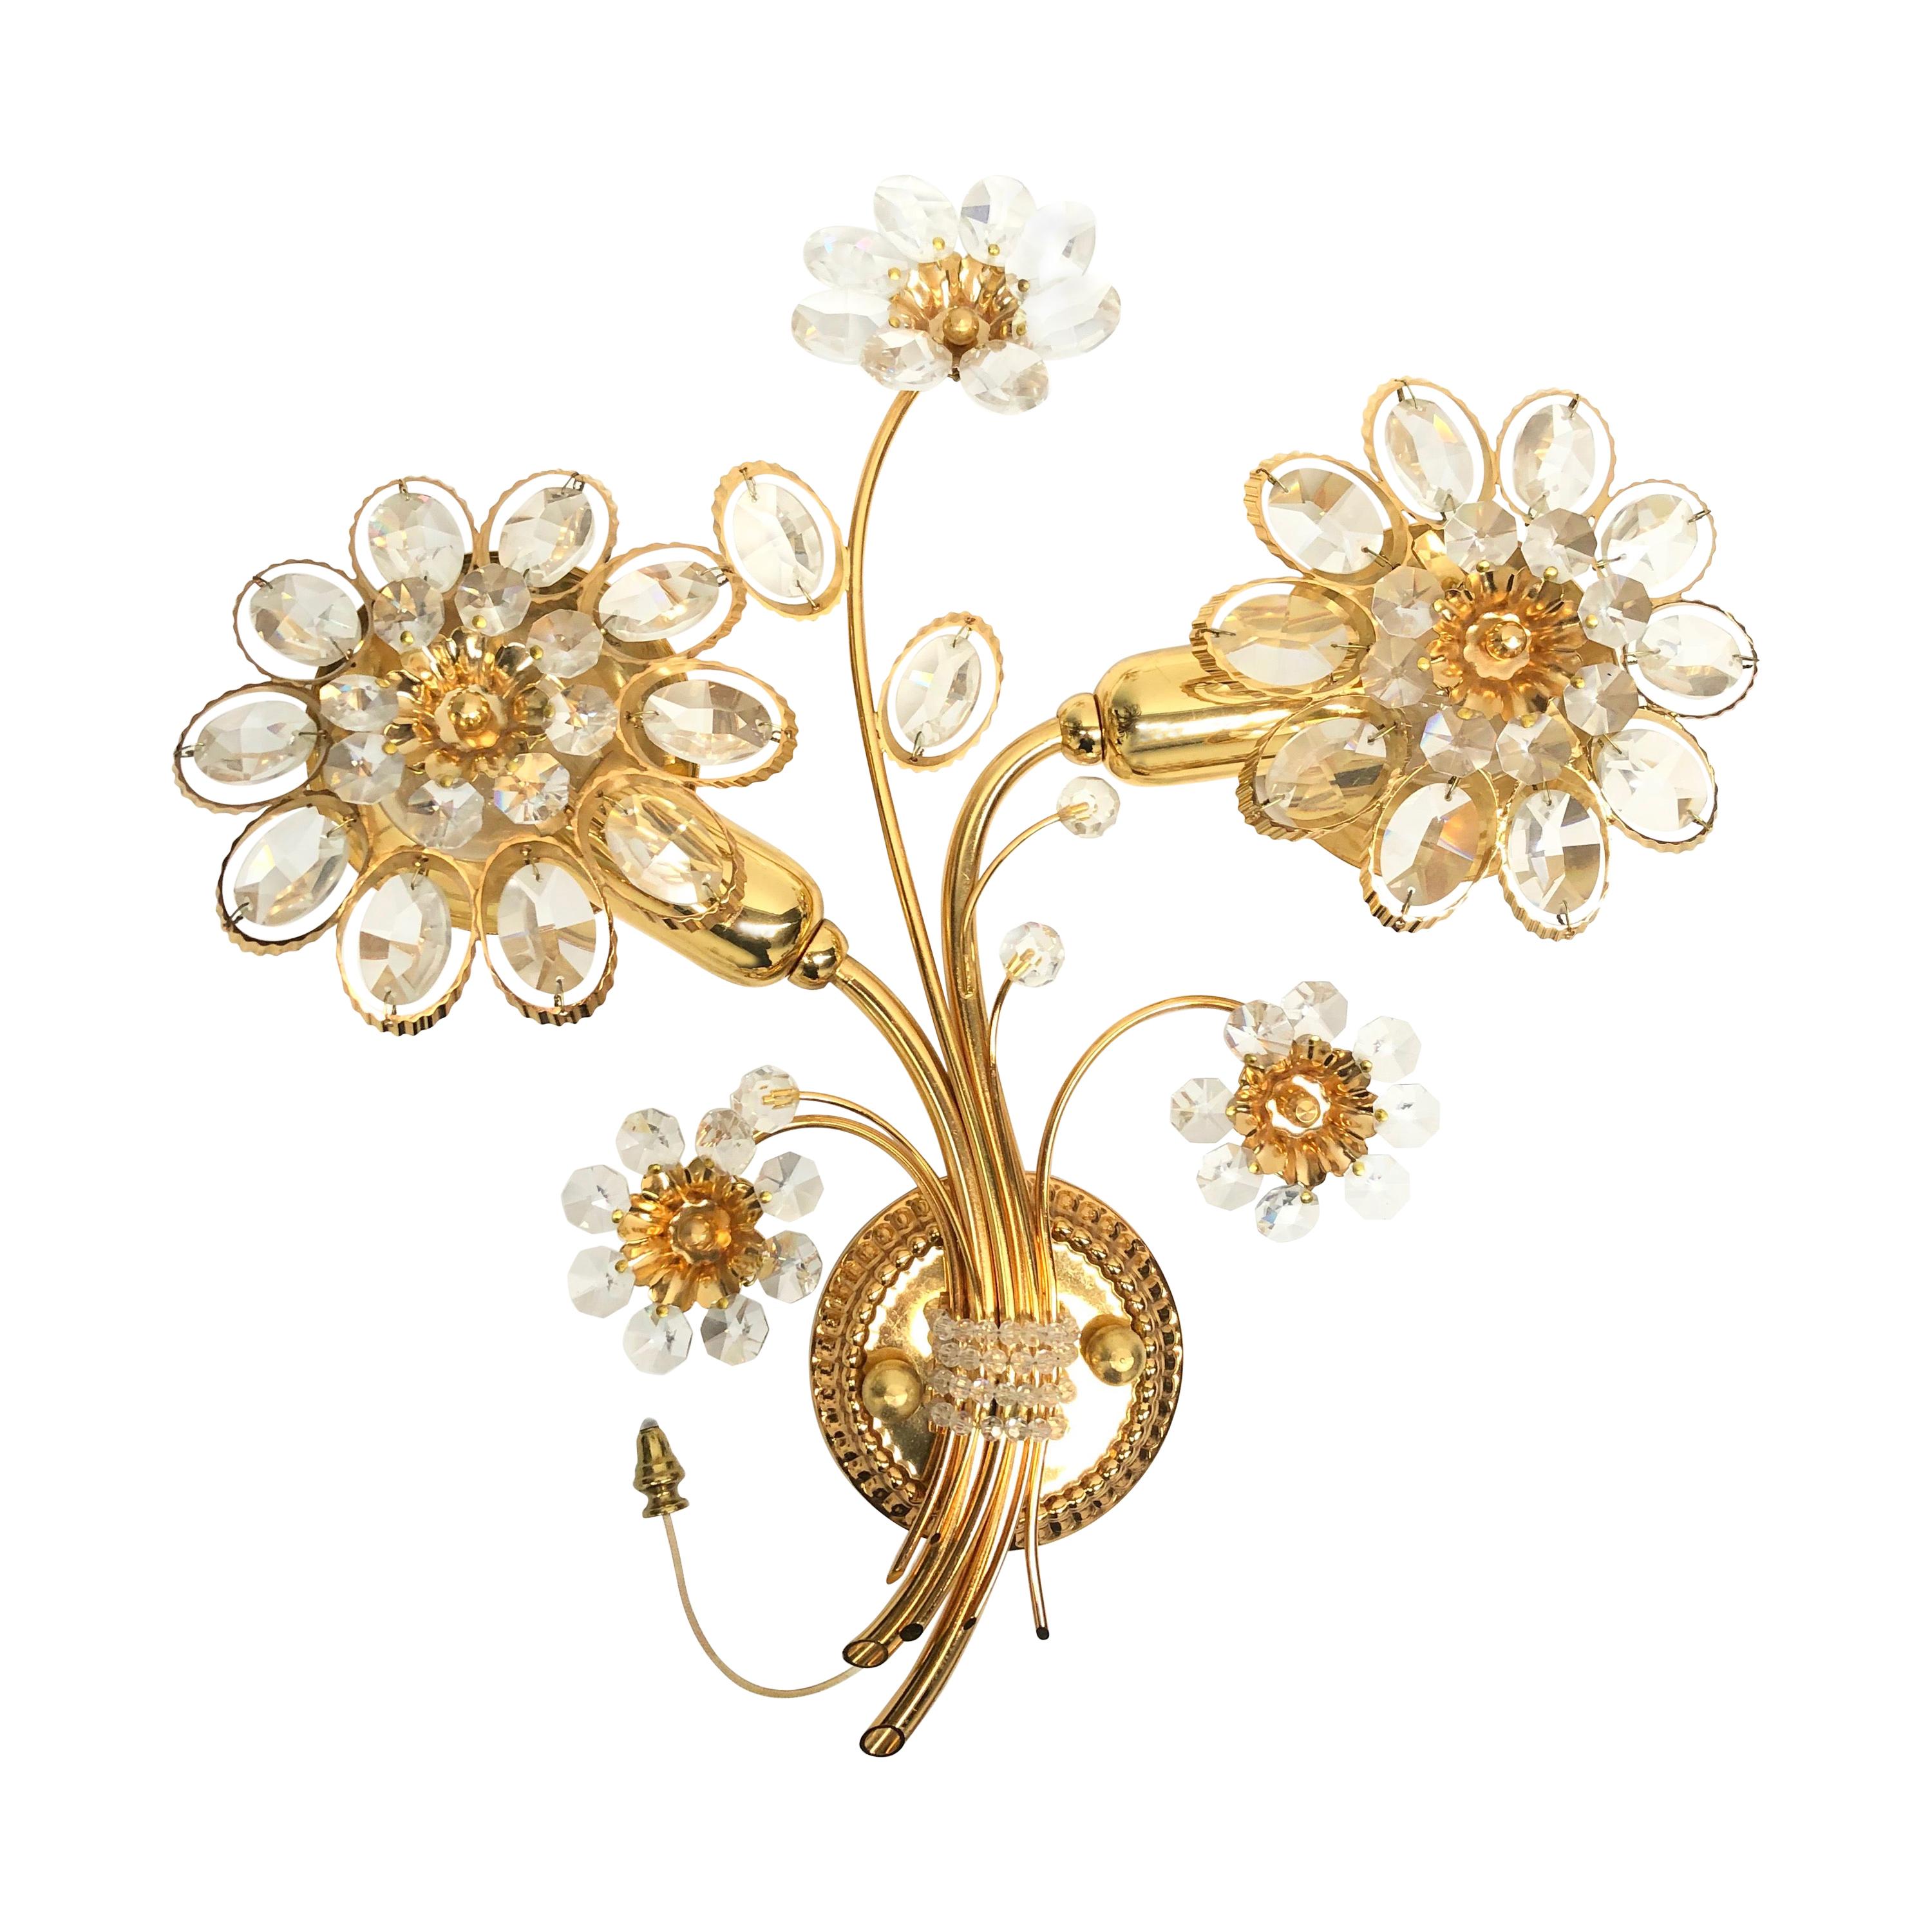 Stunning Single Vintage Gold-Plated "Palwa" Crystal Flower Sconces